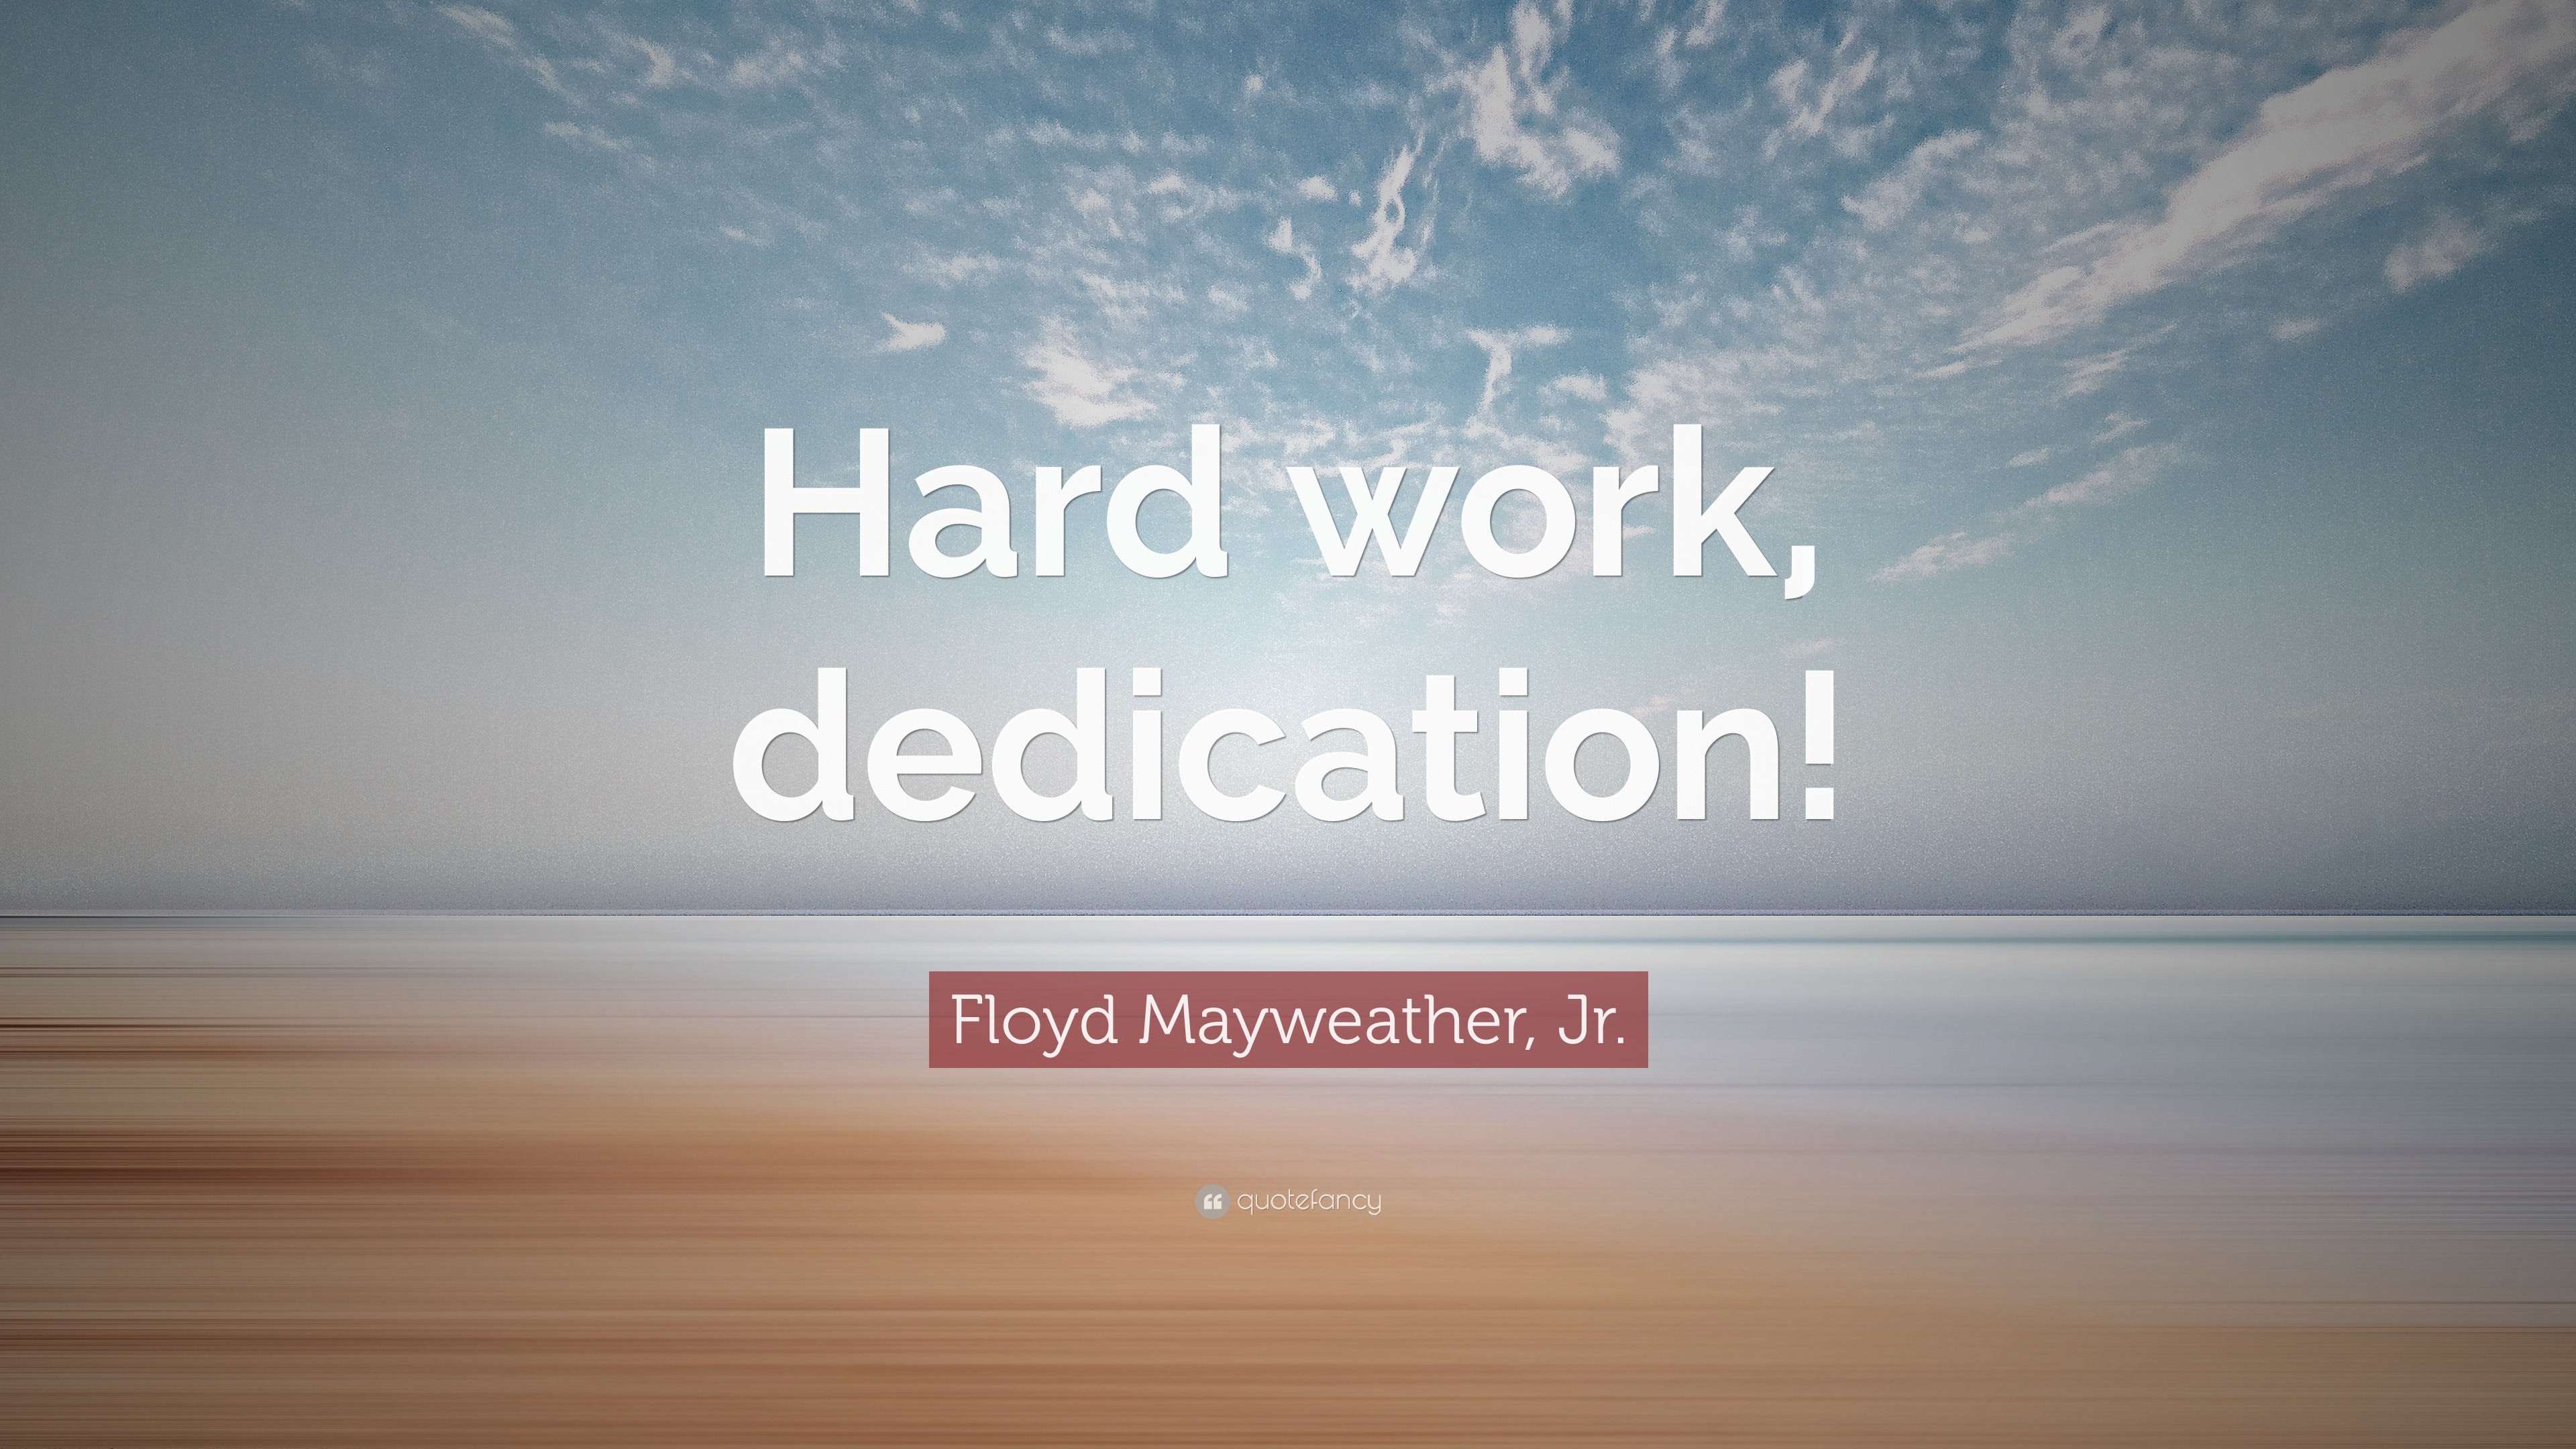 Floyd Mayweather, Jr. Quote “Hard work, dedication!” (12